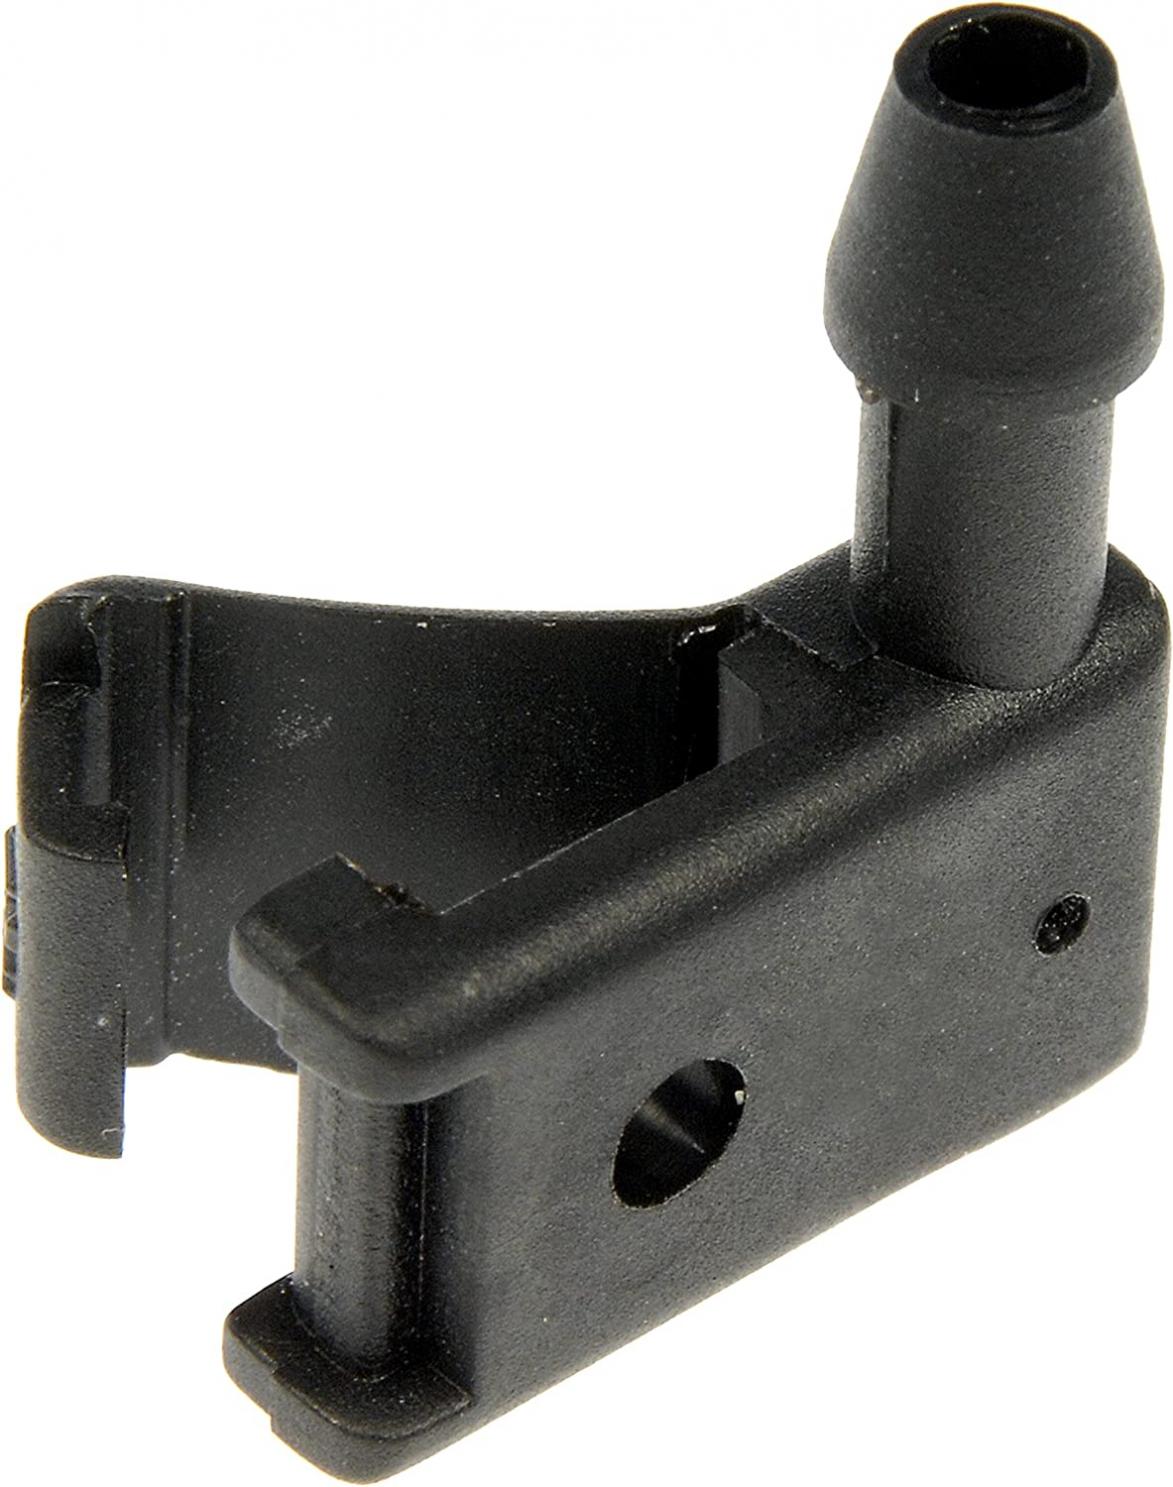 Dorman 924-5403 Wiper Nozzle Kit Compatible with Select Peterbilt Models, 3 Pack